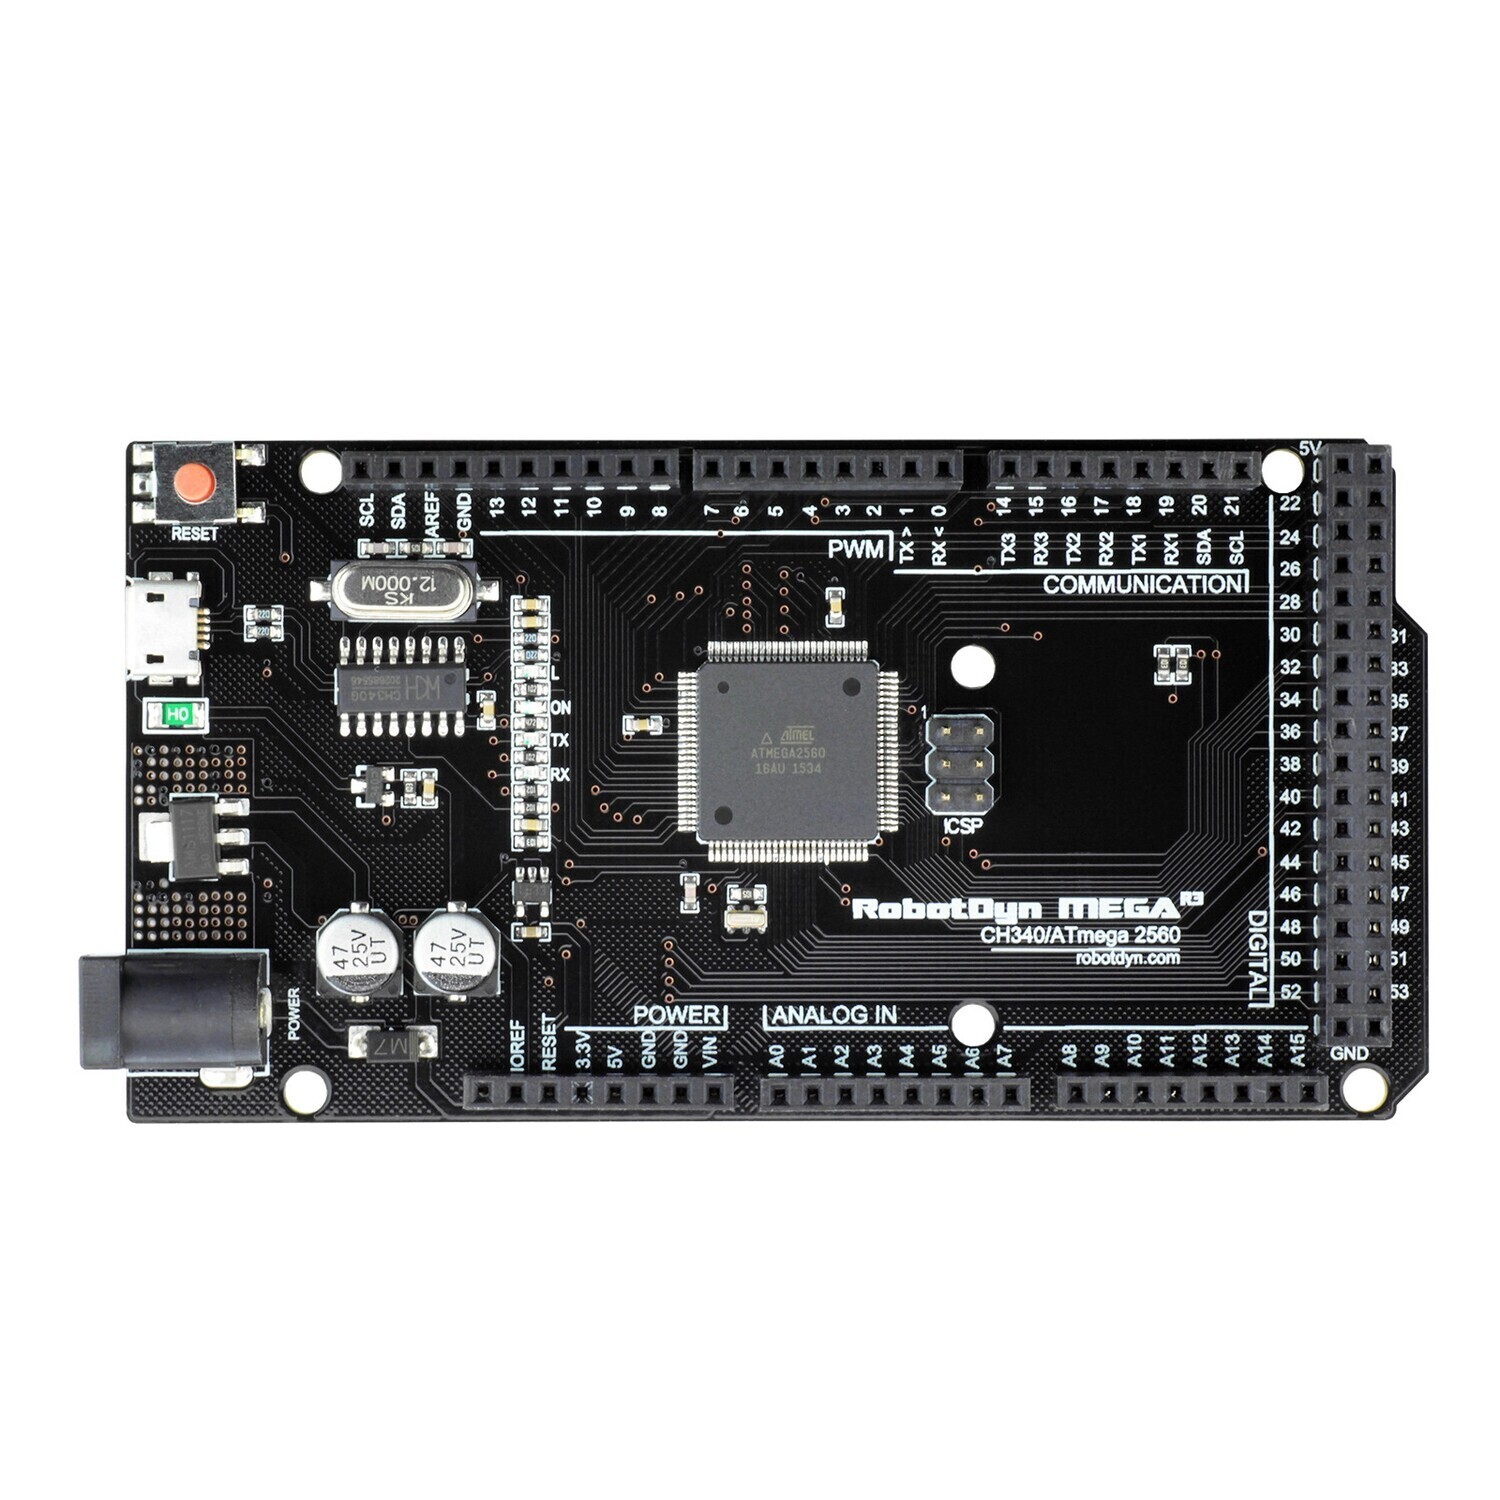 Контроллер MEGA 2560 R3 CH340G&ATmega2560-16AU, MicroUSB (Arduino-совместимый контроллер)